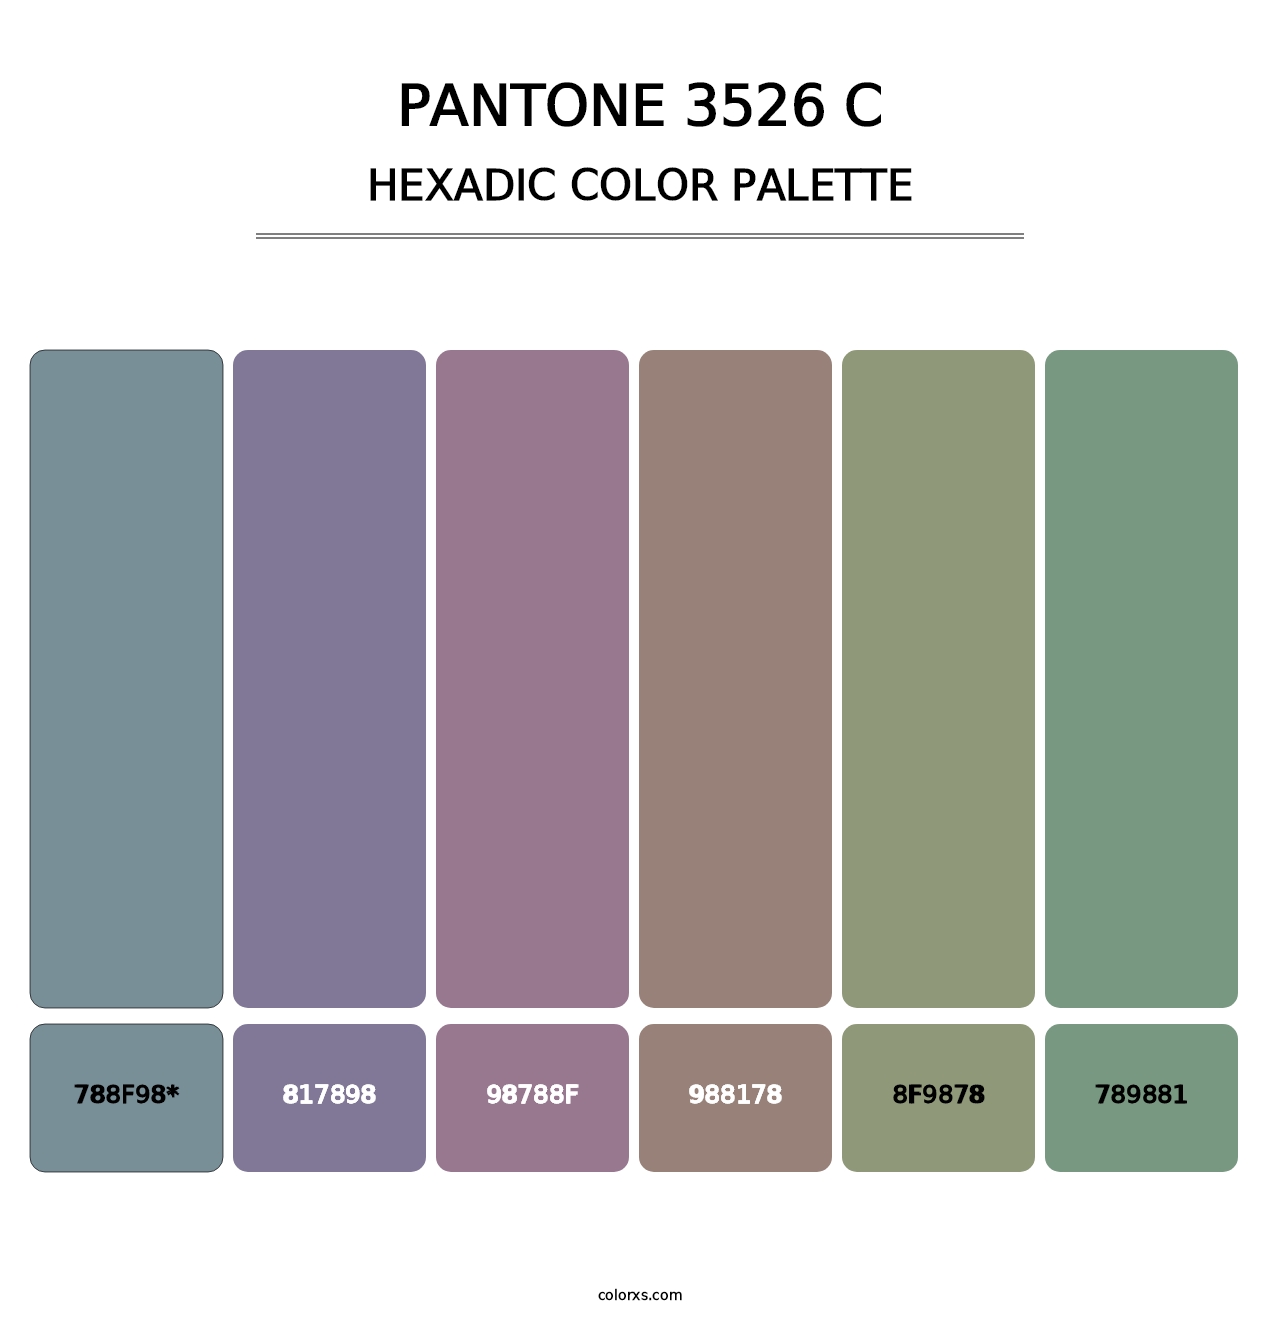 PANTONE 3526 C - Hexadic Color Palette